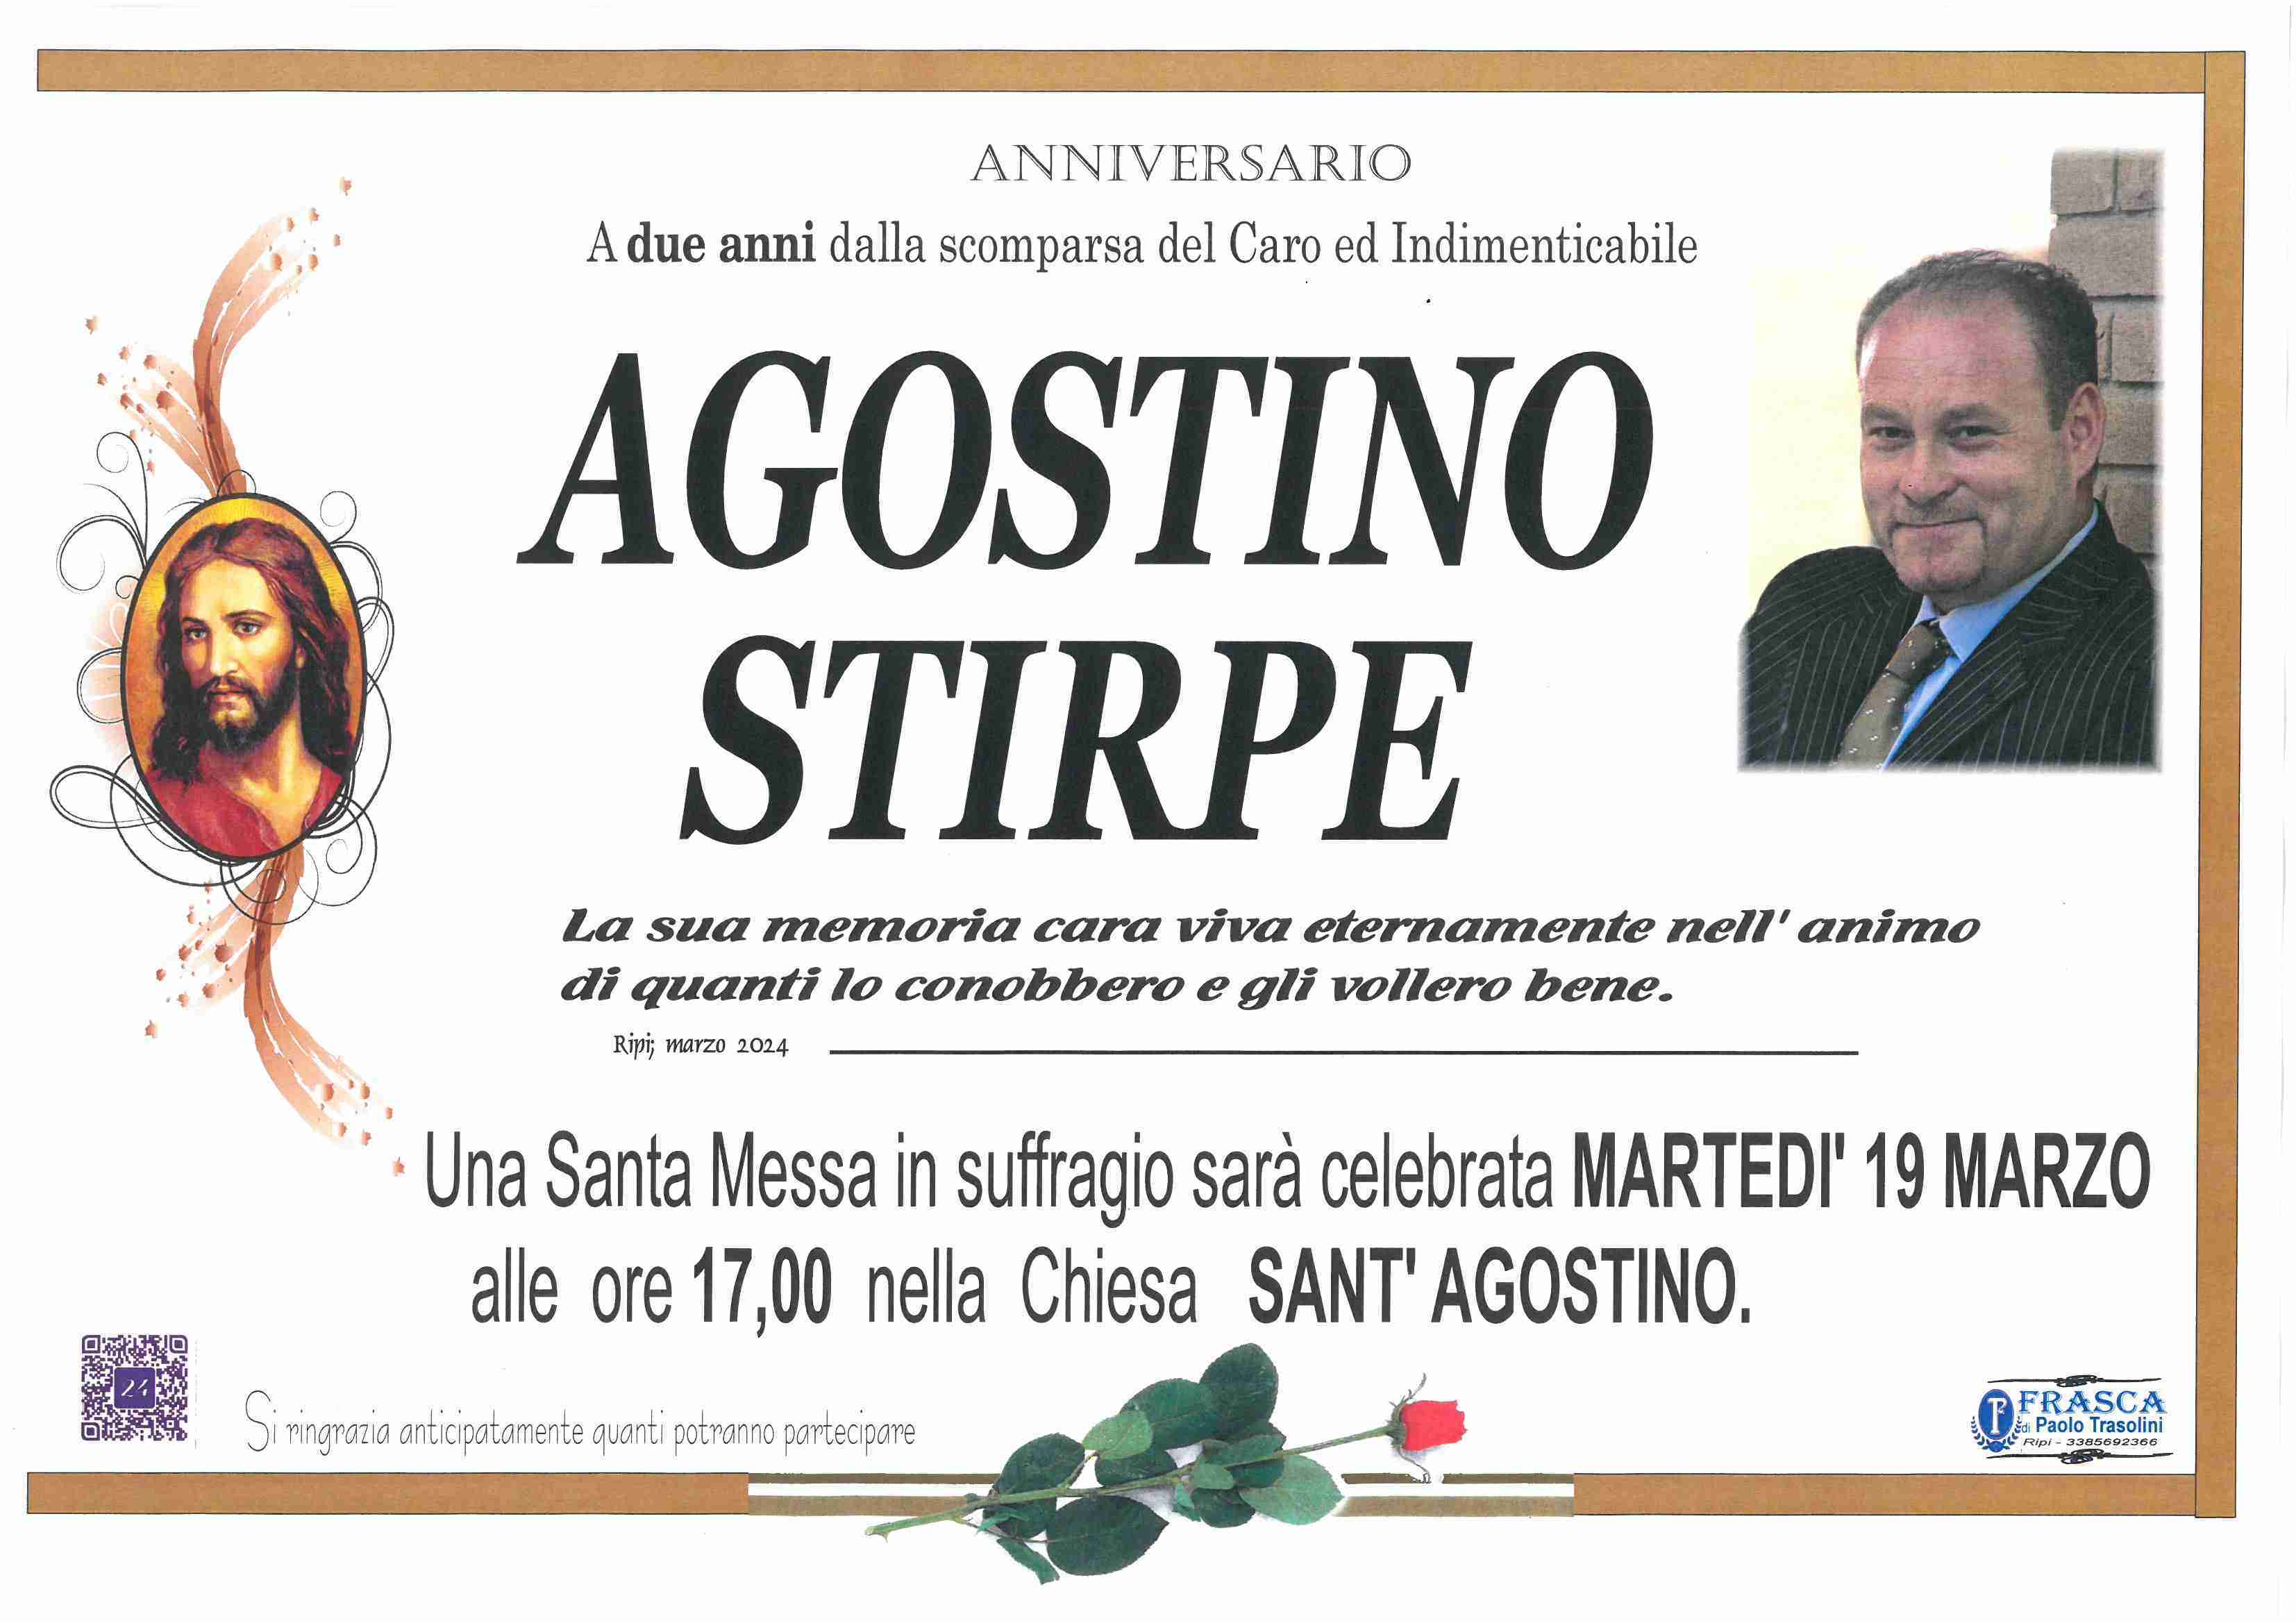 Agostino Stirpe